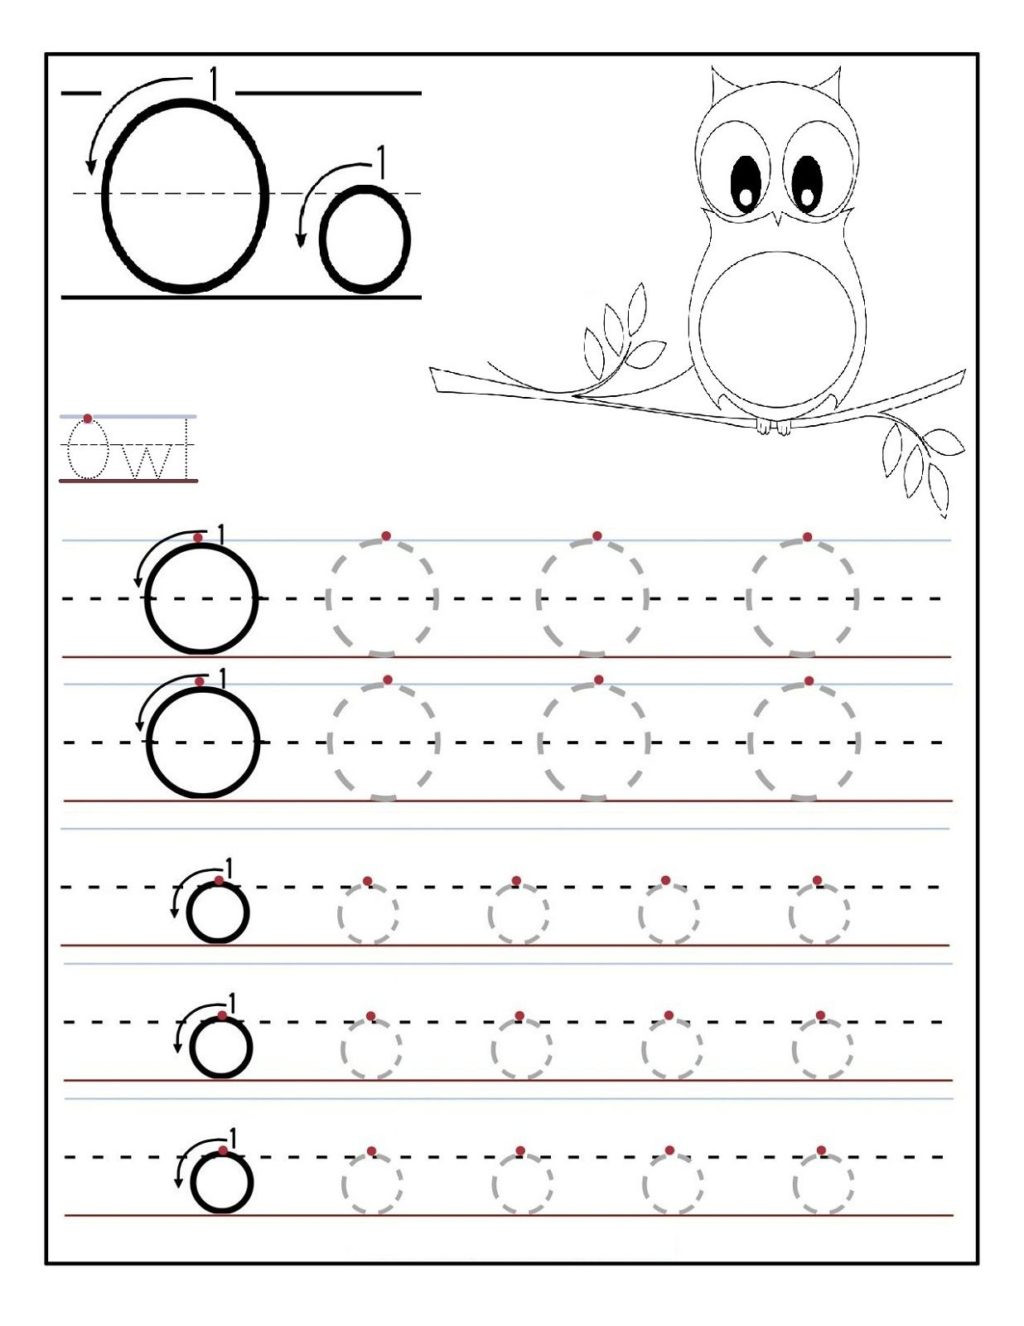 Letter O Worksheet for Kindergarten Worksheet Awesome O Worksheets for Kindergarten Image